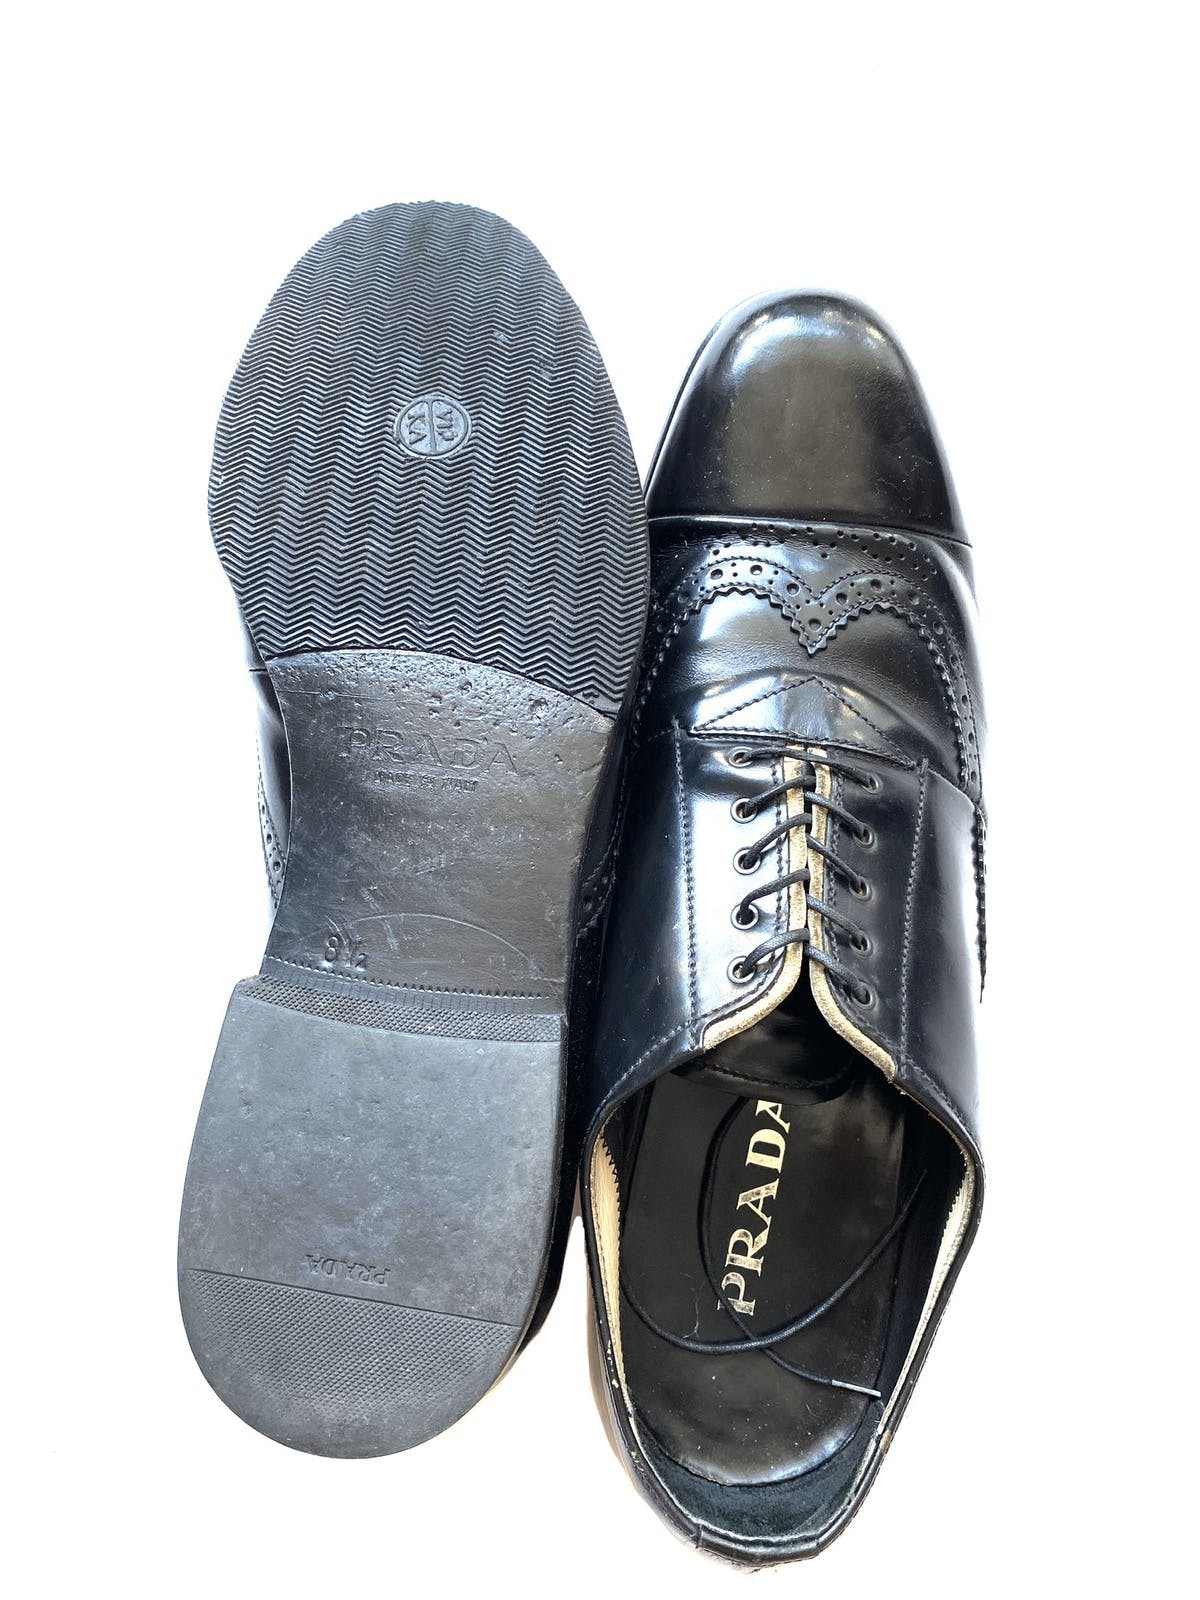 Prada Deconstructed Leather Brogue Shoes Toe Cap - 5